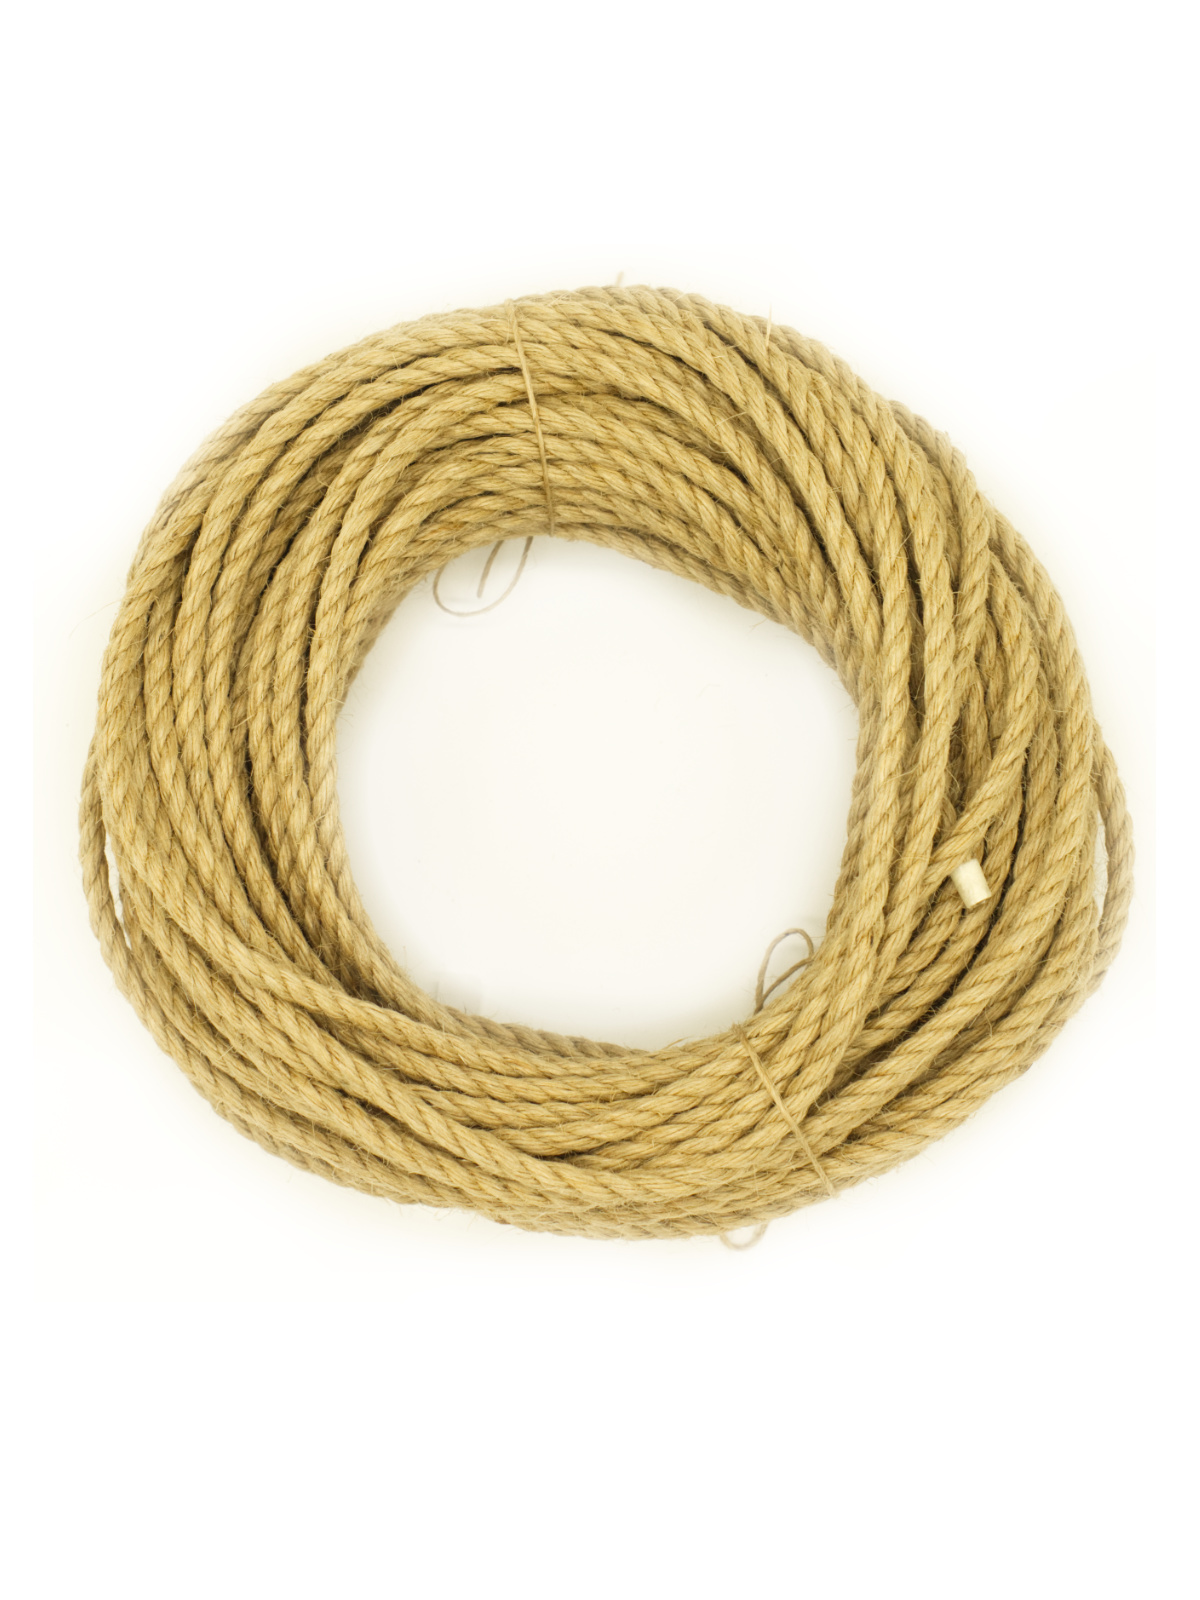 100m ∅ 5.5mm raw jute rope, AMATSUNAWA 30, JBO-free, for DIY processing